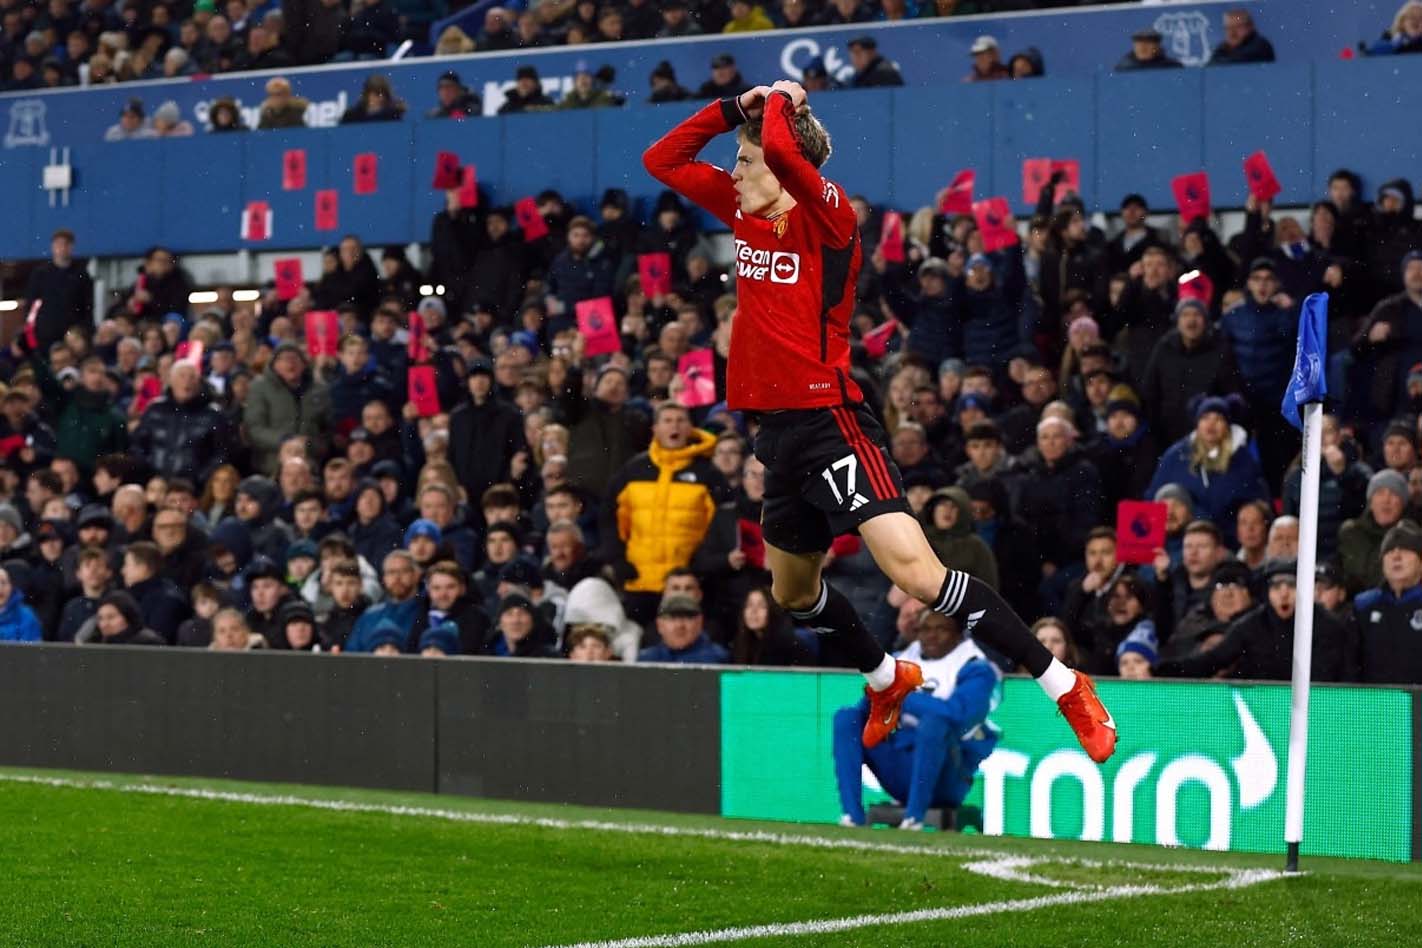 Khoảnh khắc siêu hạng của Alejandro Garnacho. Ảnh: Manchester United